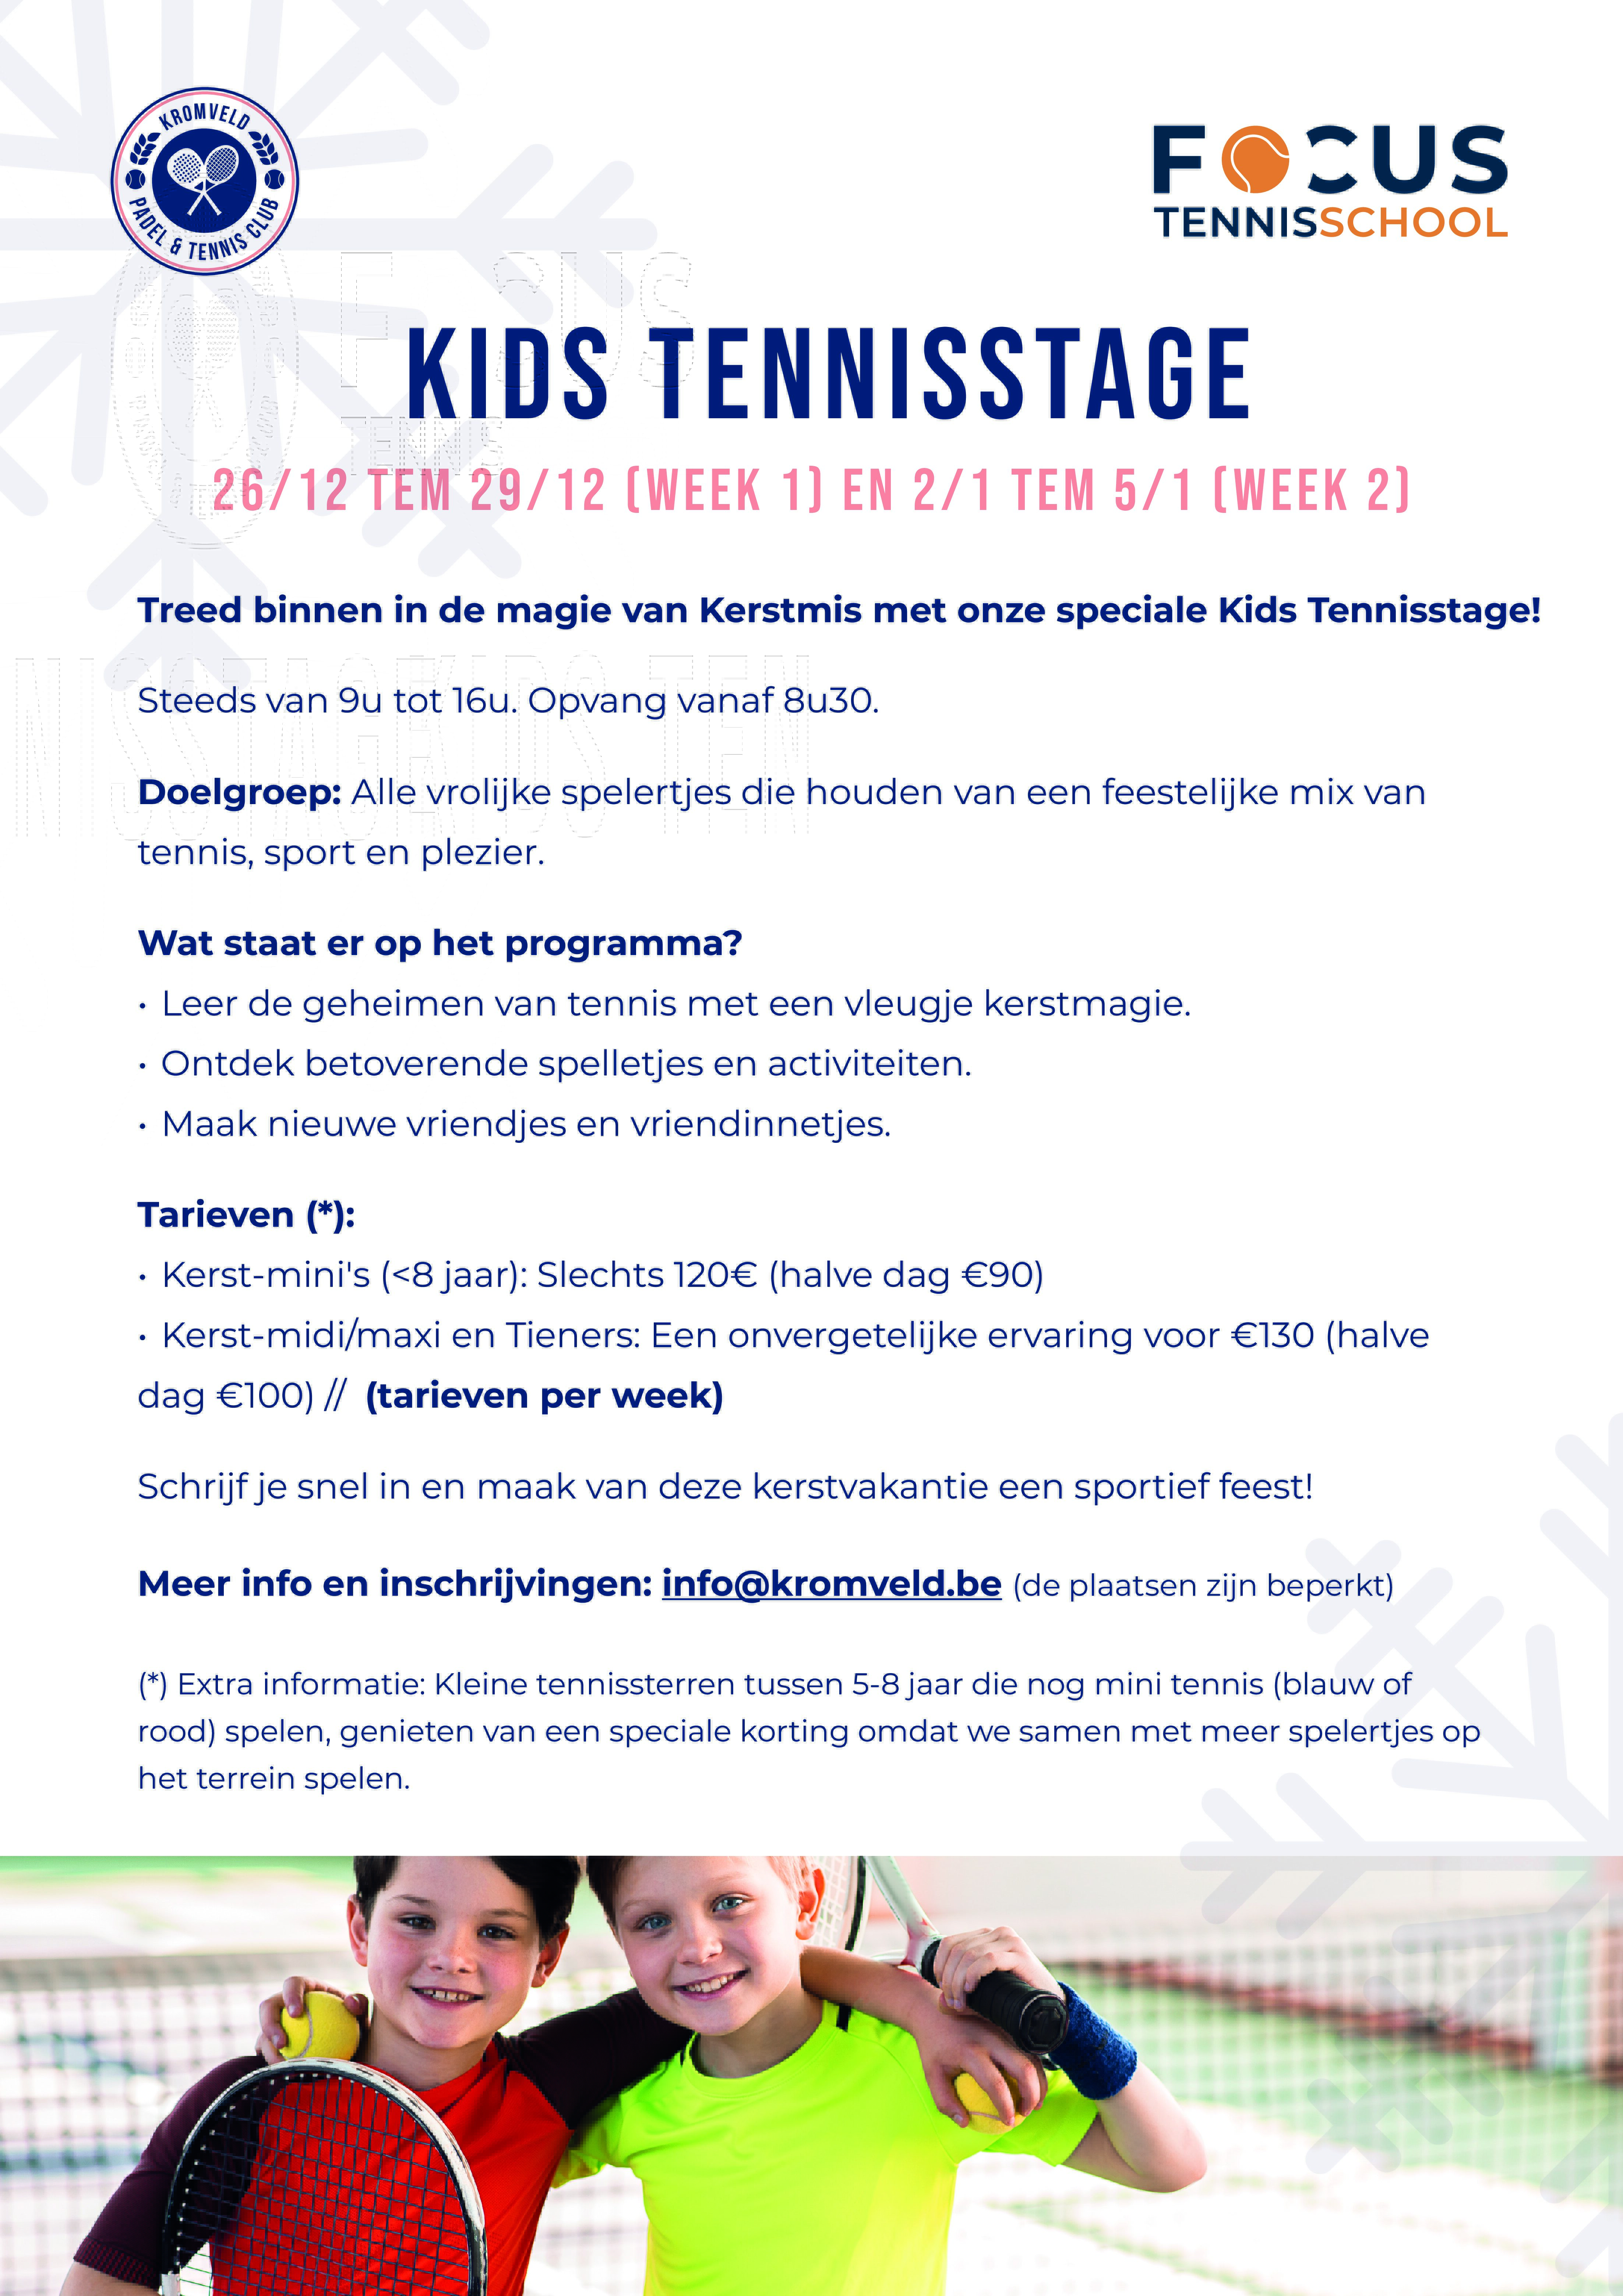 Kids Tennisstage - Kromveld